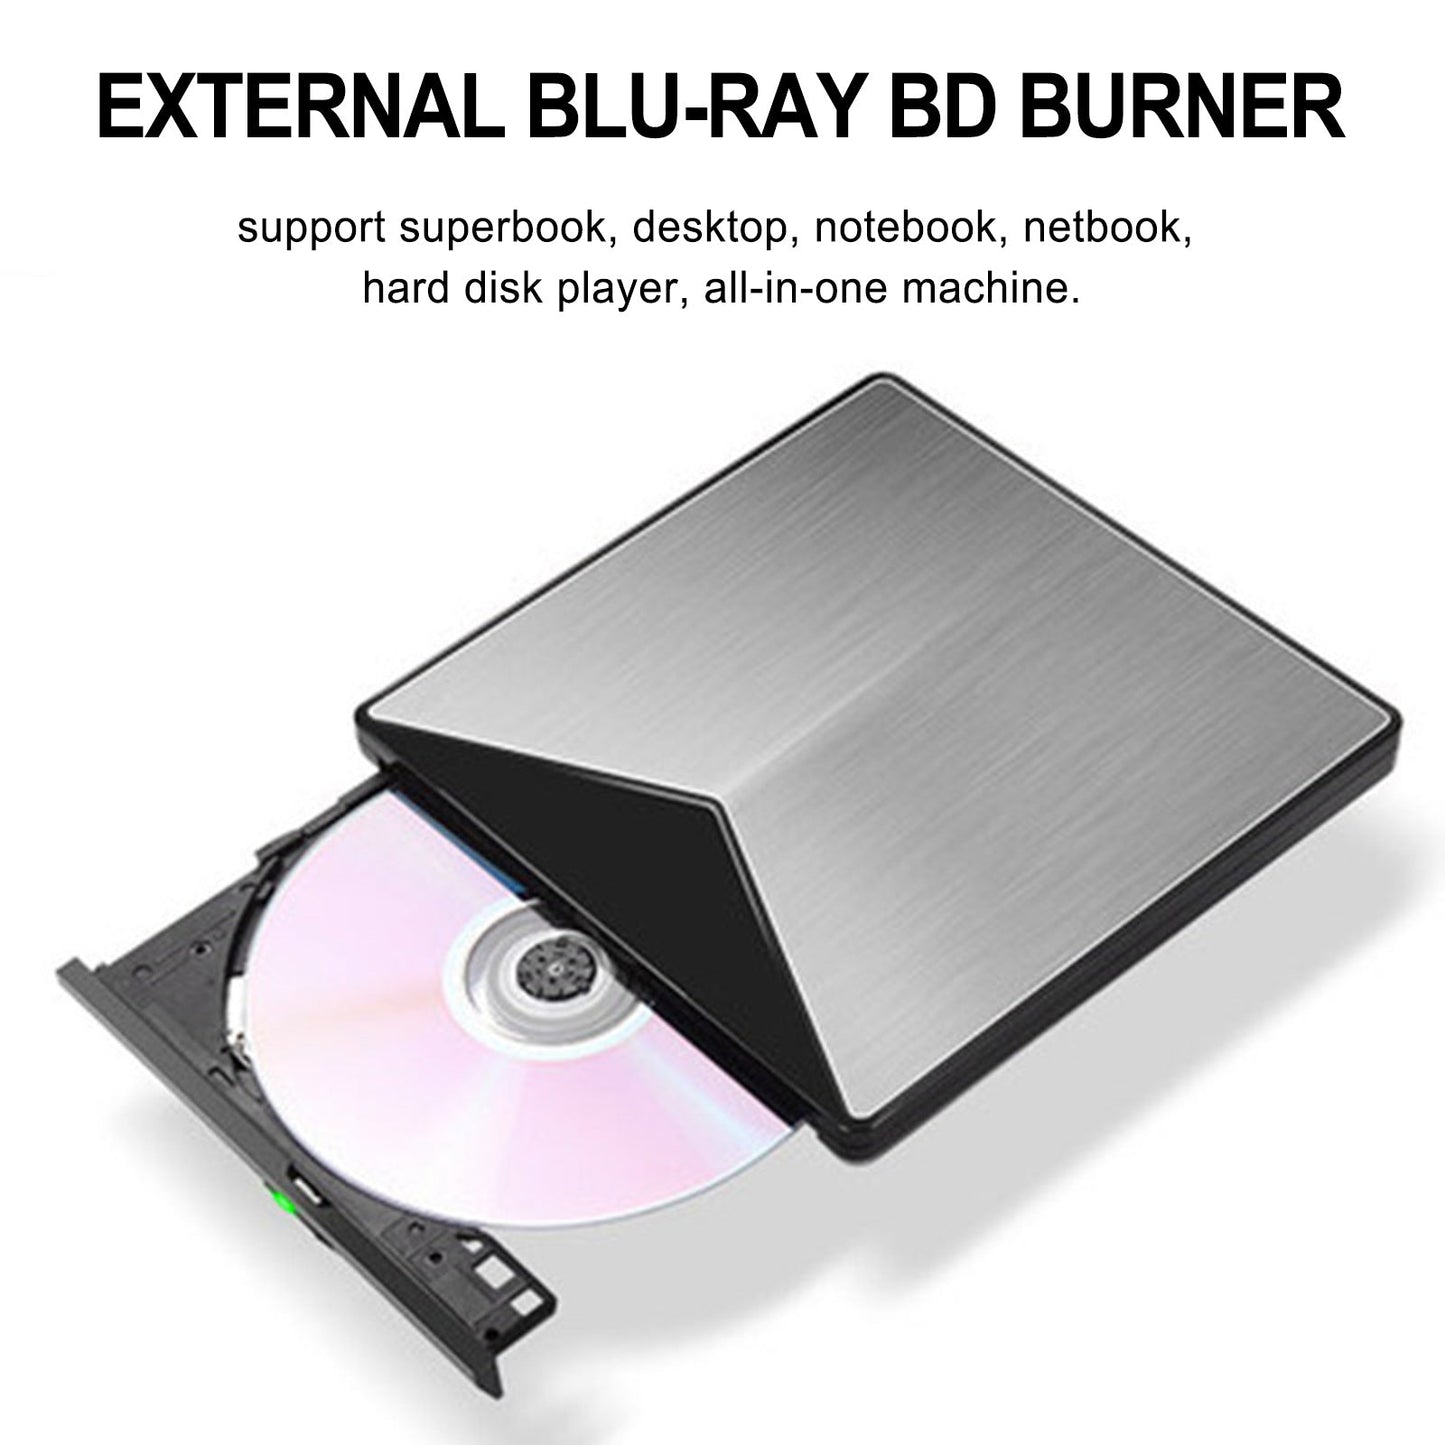 Genuine Bluray Burner External USB 3.0 Ultra Slim DVD BD Recorder Drive